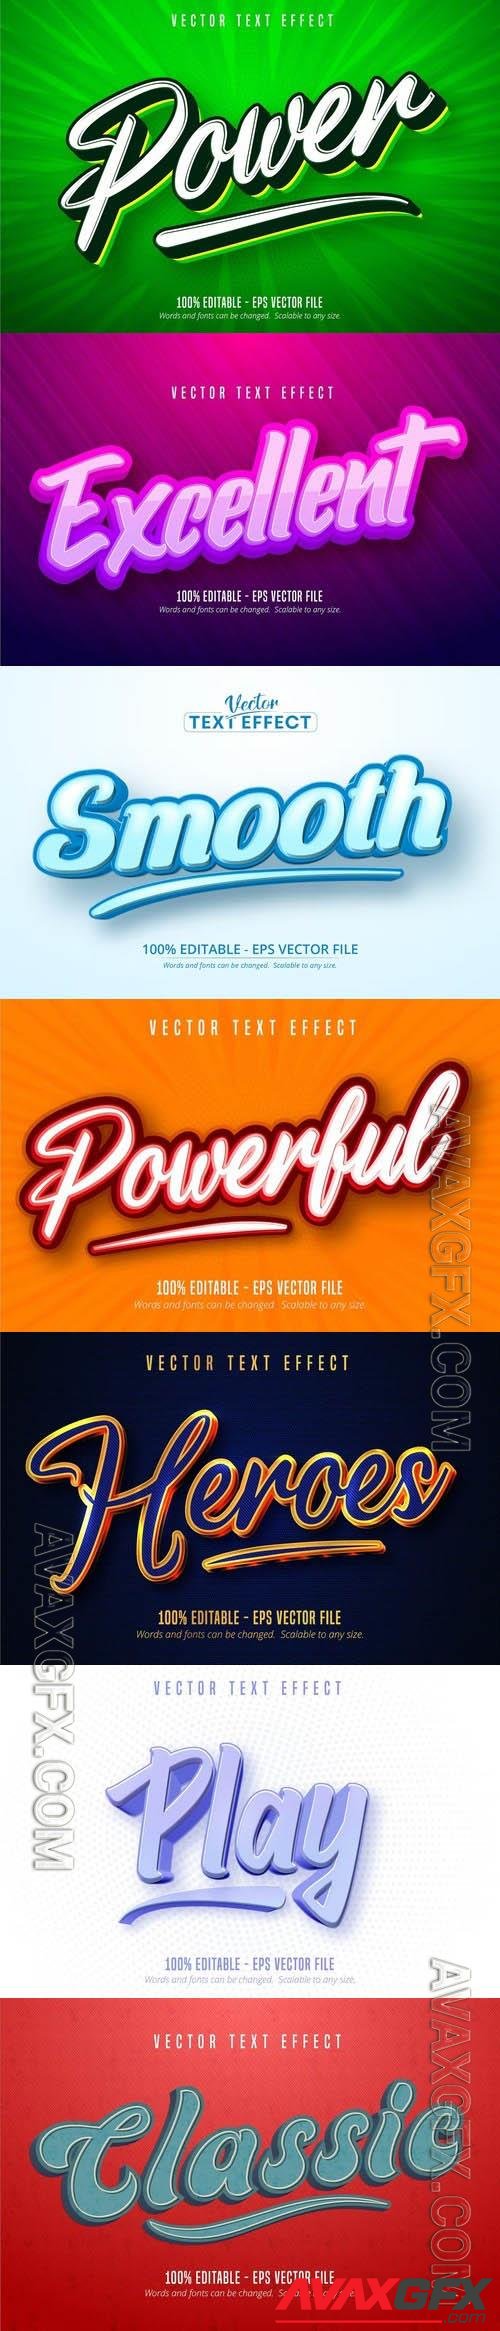 Vector 3d text editable, text effect font vol 119 [EPS]